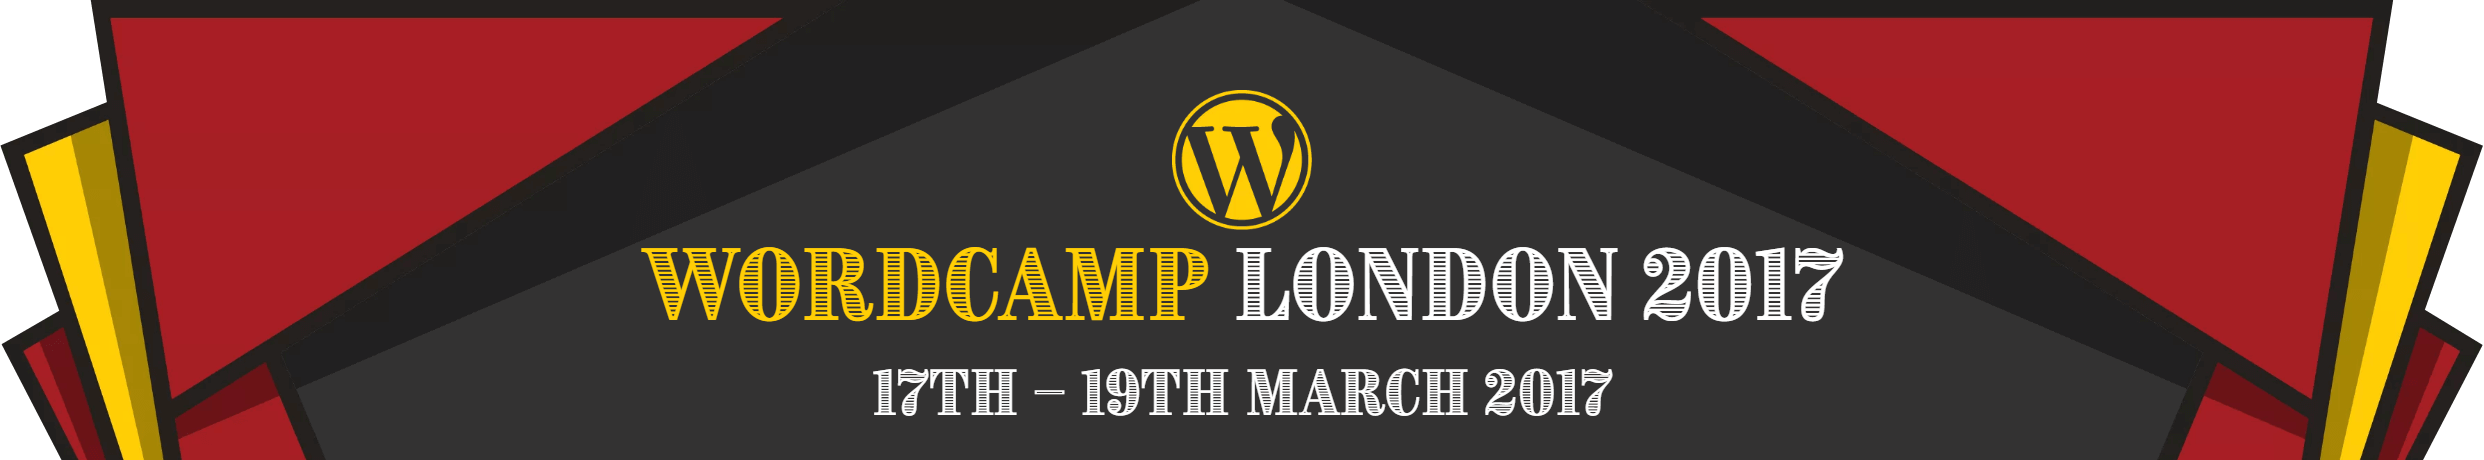 WordCamp London 2017 logo